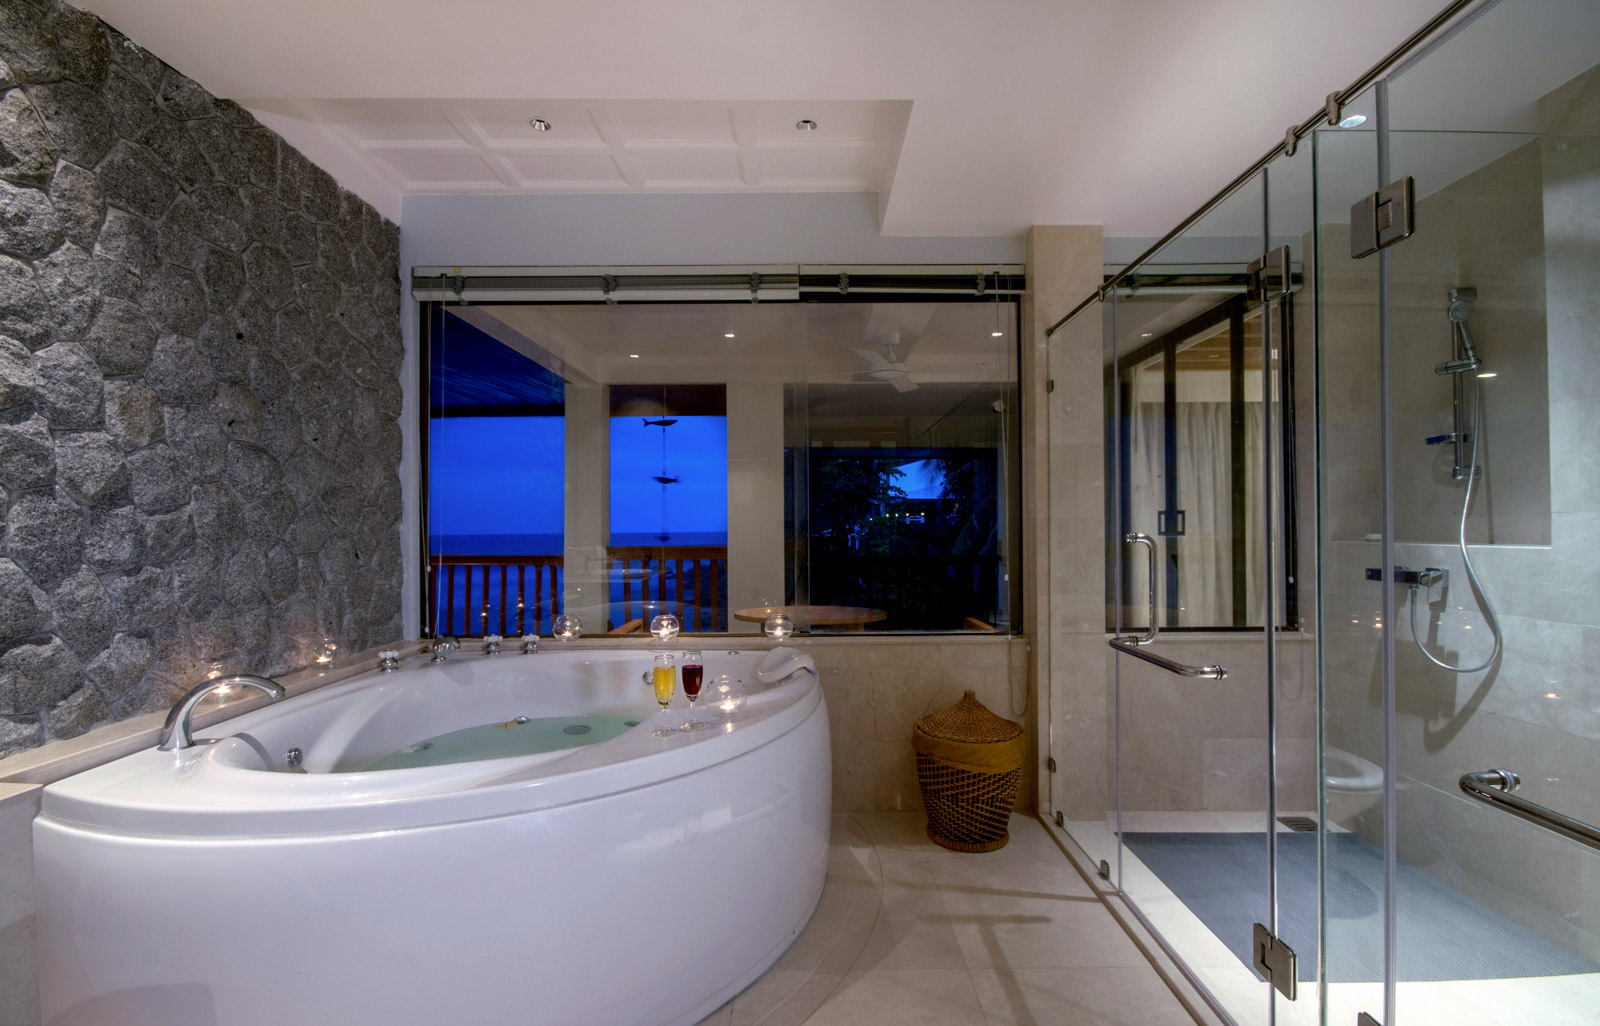 One-bedroom Royal Thani Suite | Katathani Phuket Beach Resort